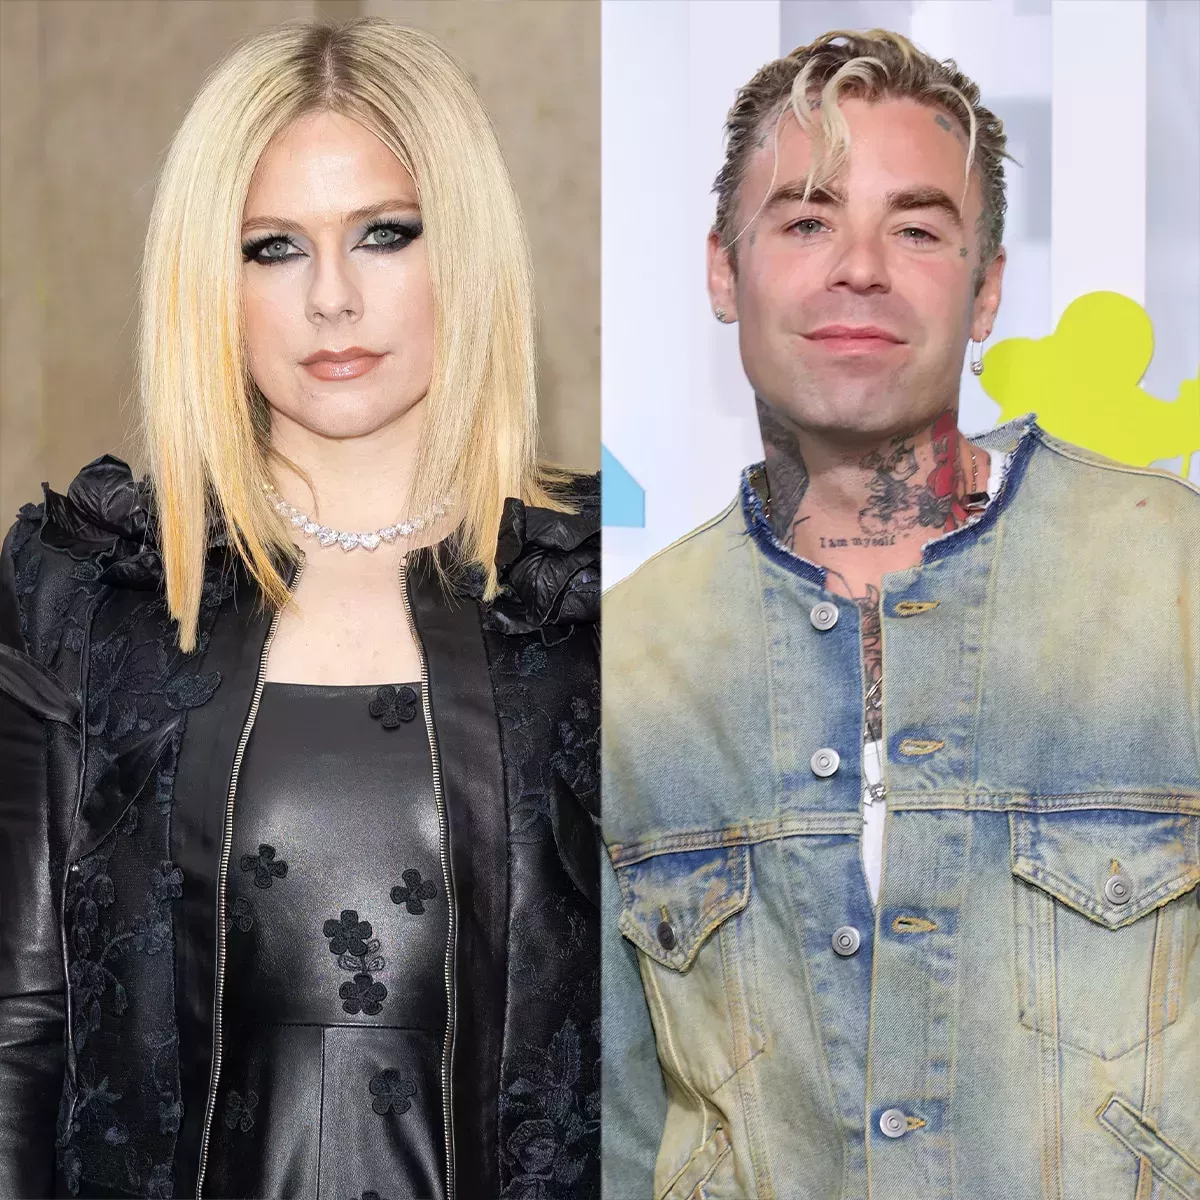 Mod Sun comparte lo que "salvó" su vida tras la ruptura con Avril Lavigne